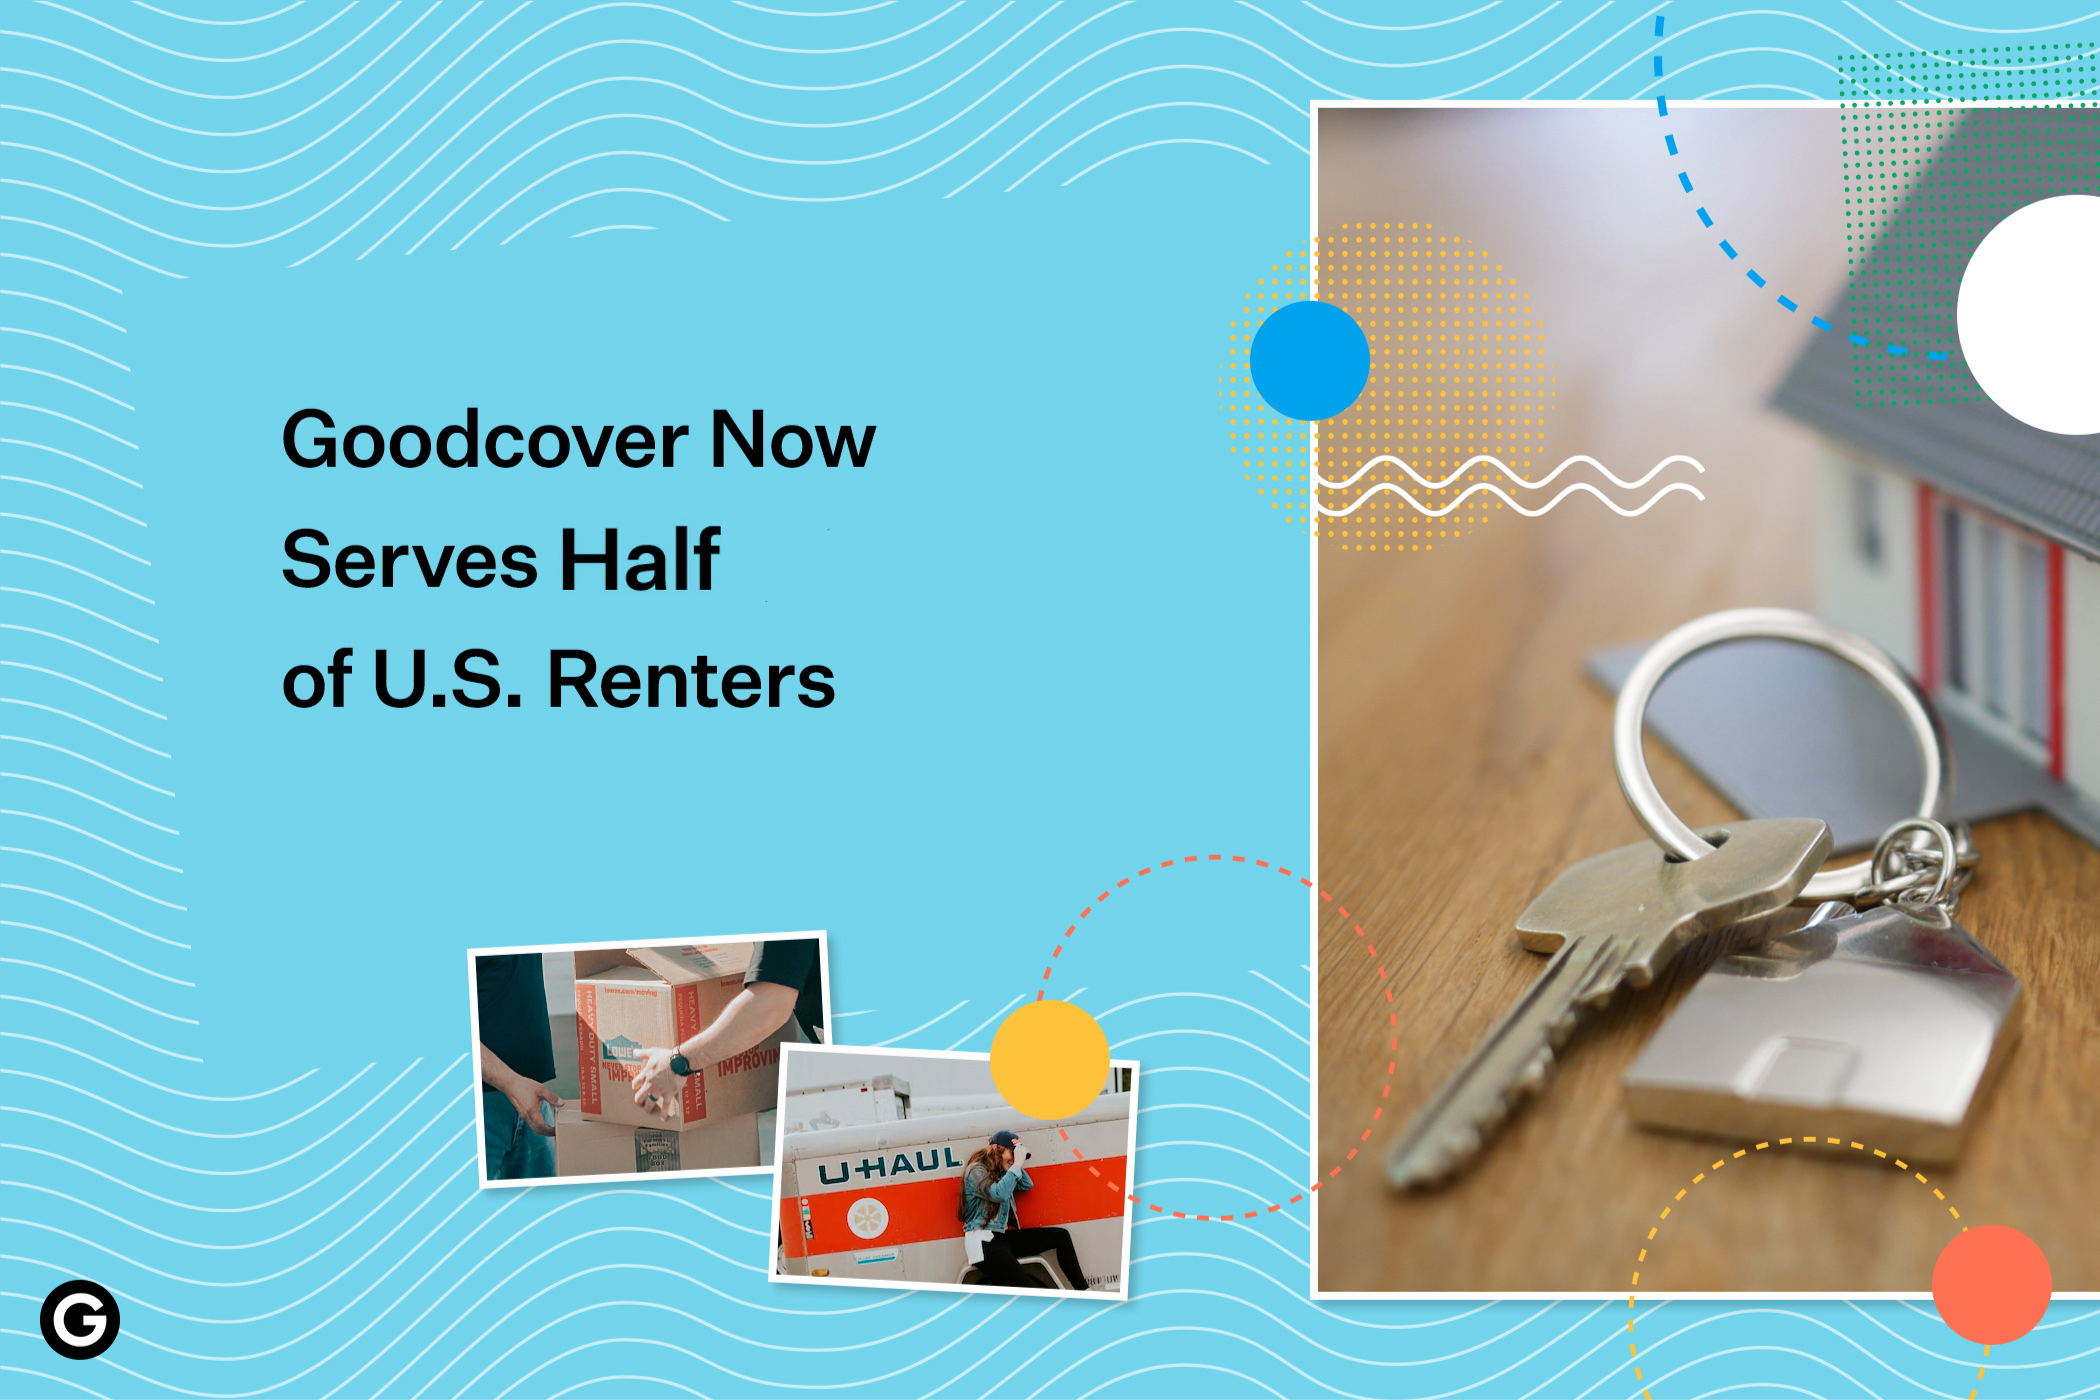 Goodcover Reaches New Milestone; Now Serves Half of U.S. Renters